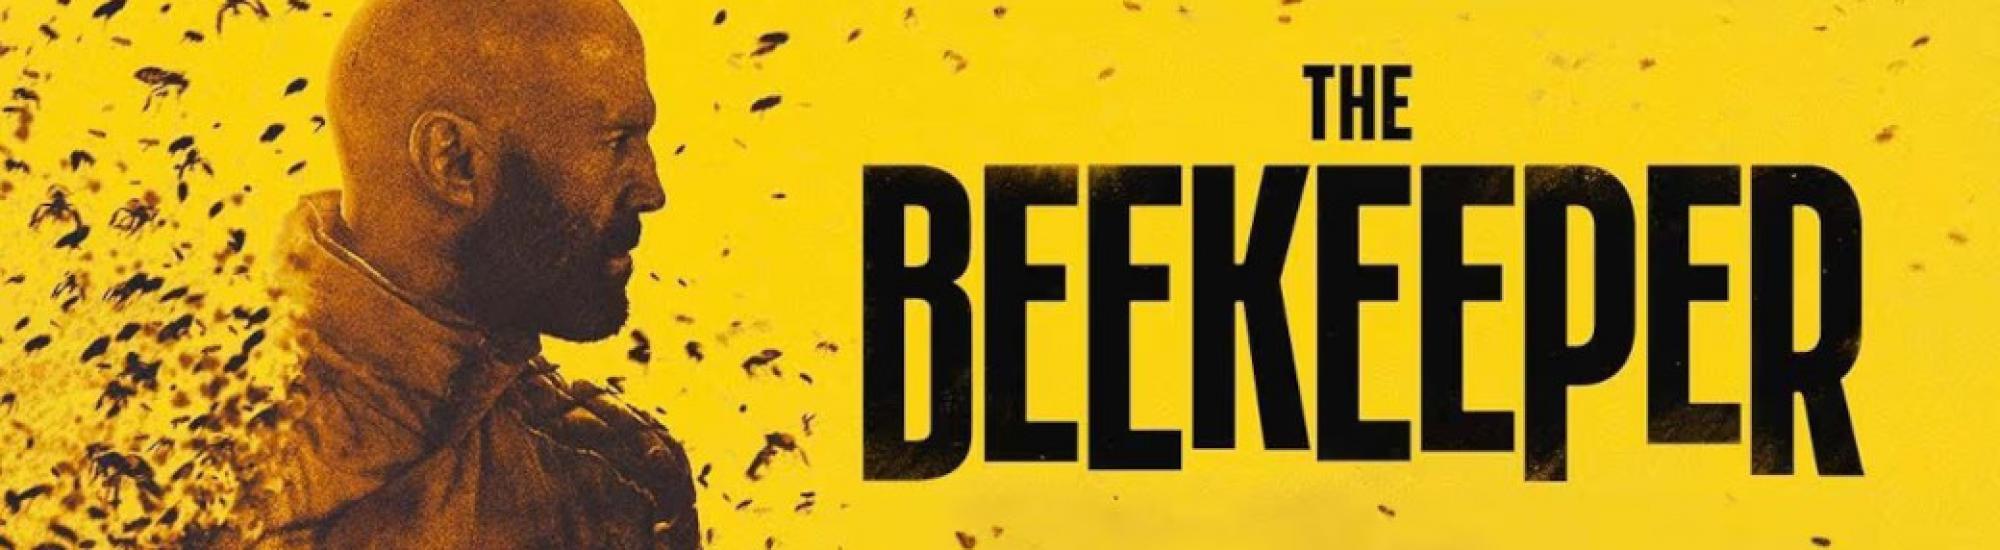 The beekeeper banner